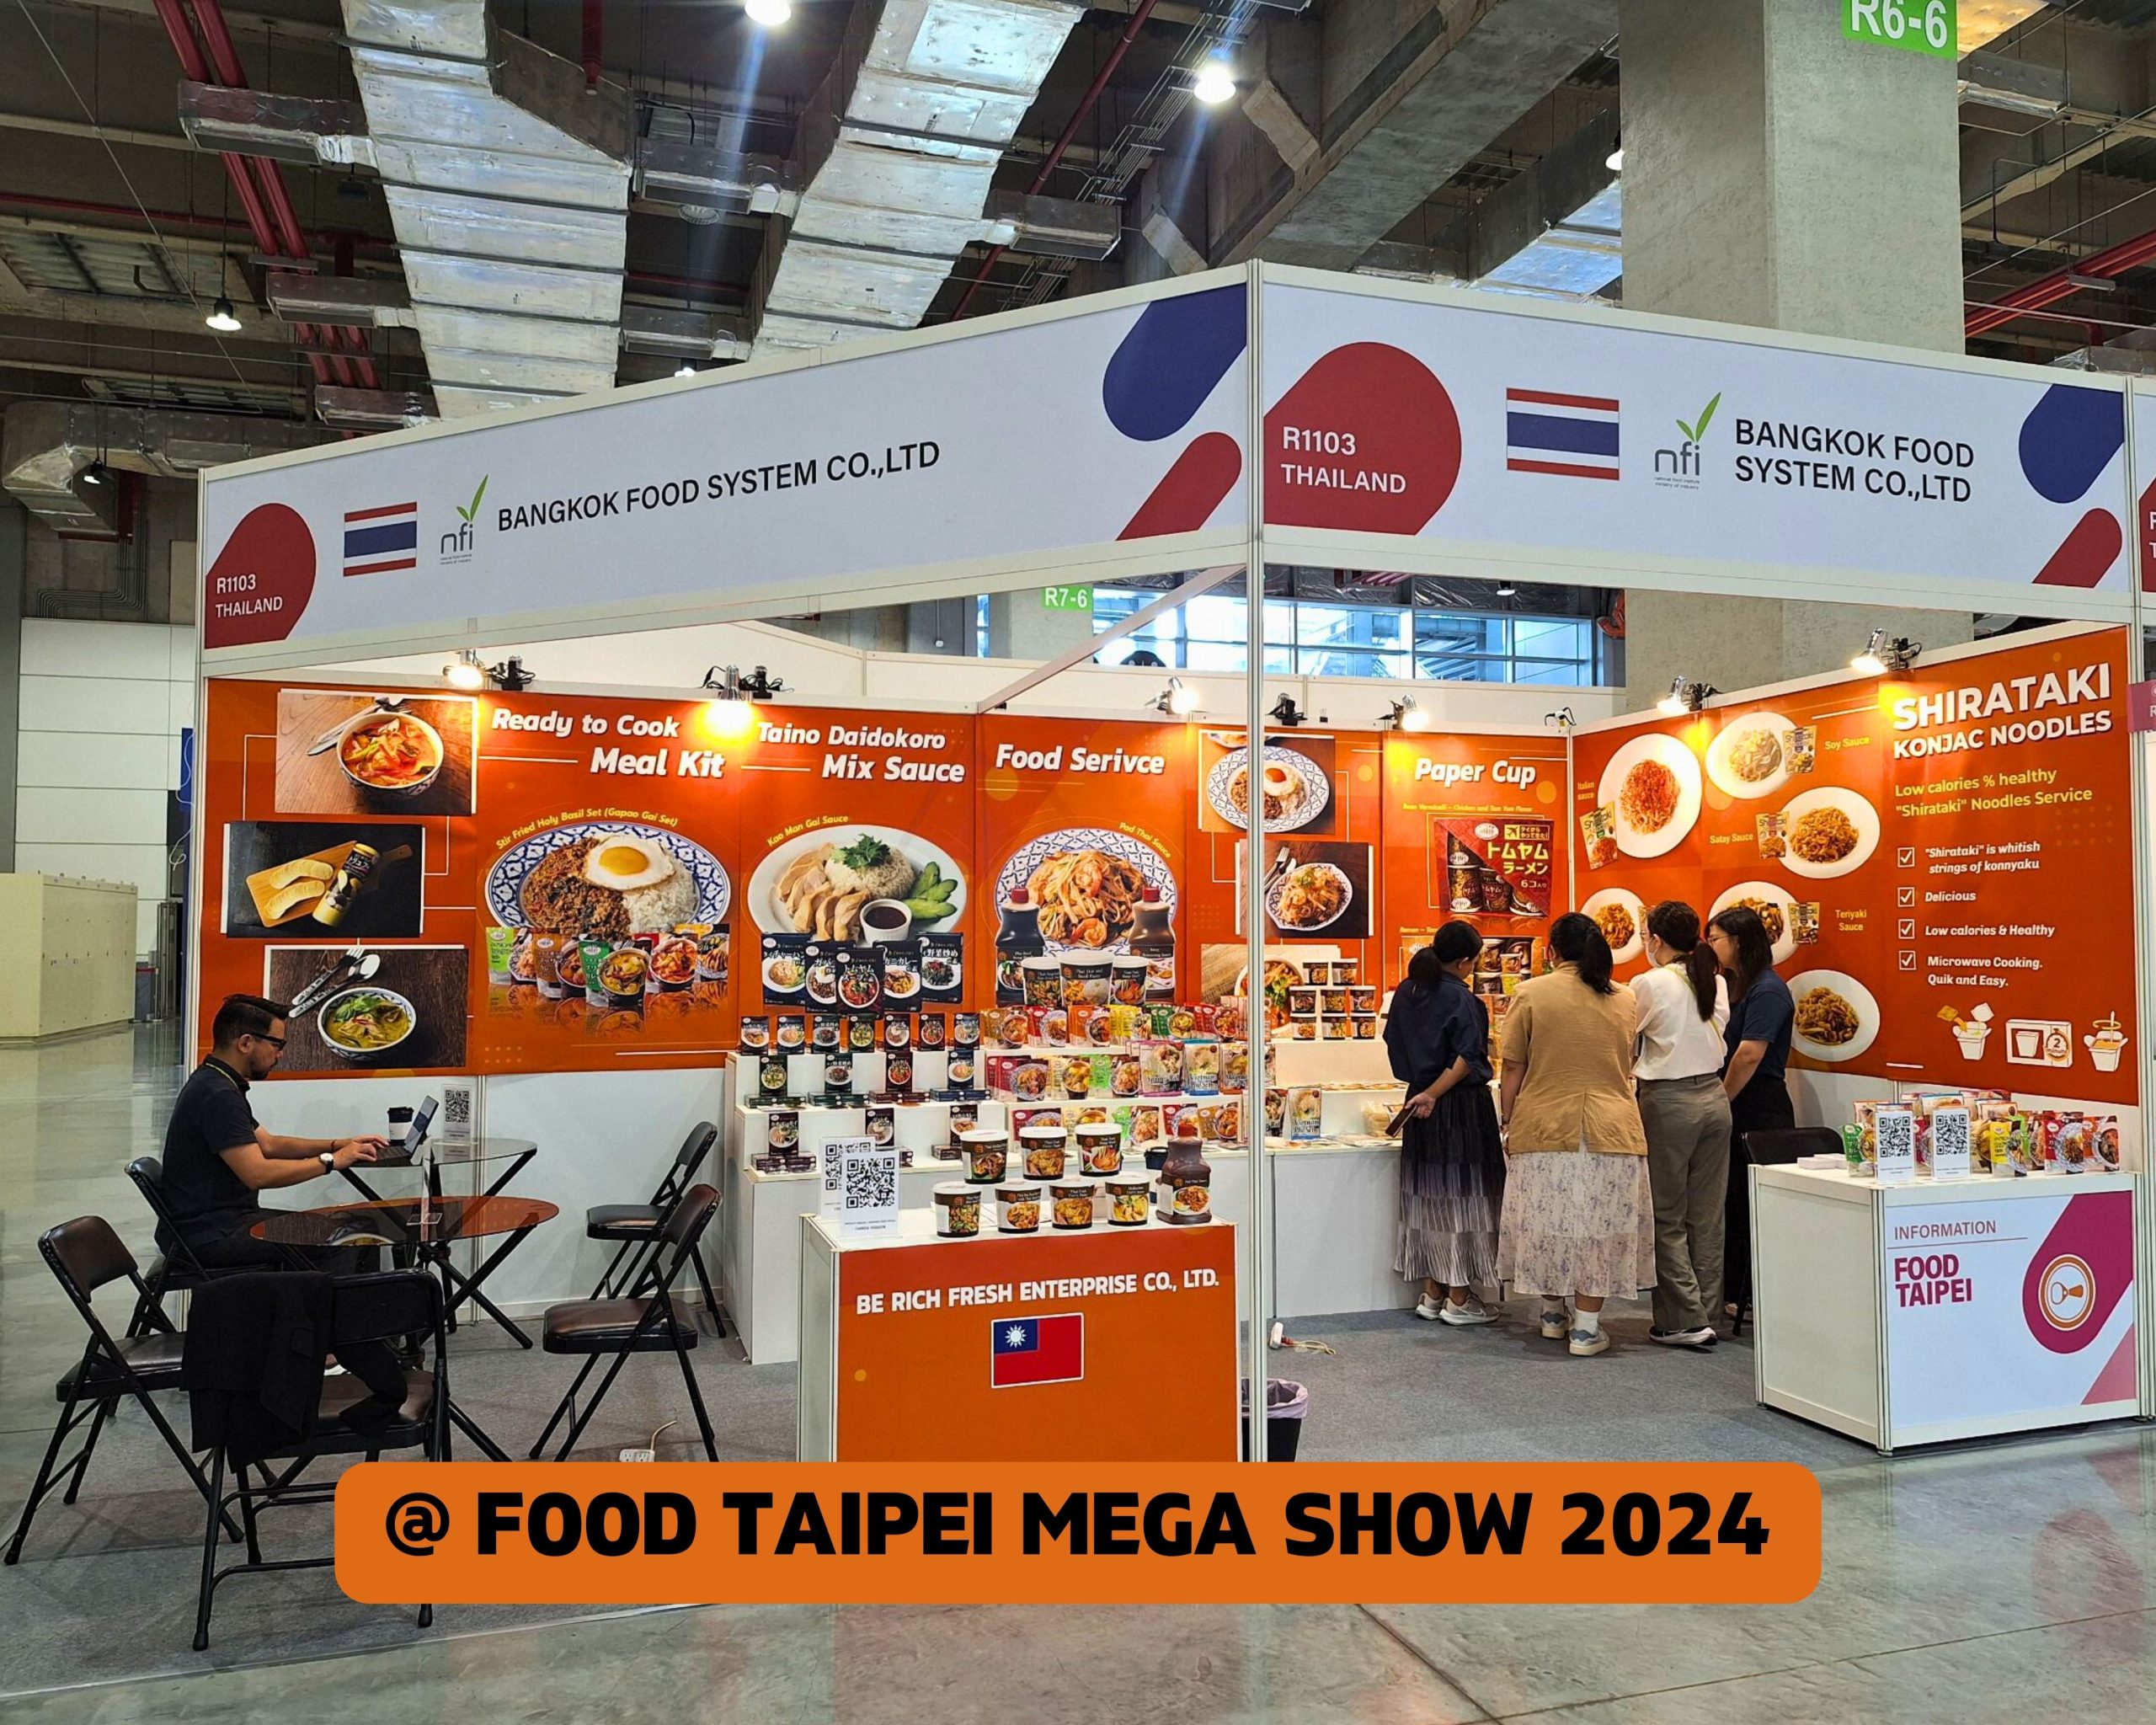 FOOD TAIPEI MEGA SHOW 2024 มหกรรมแสดงสินค้าอาหารที่ประเทศไต้หวัน